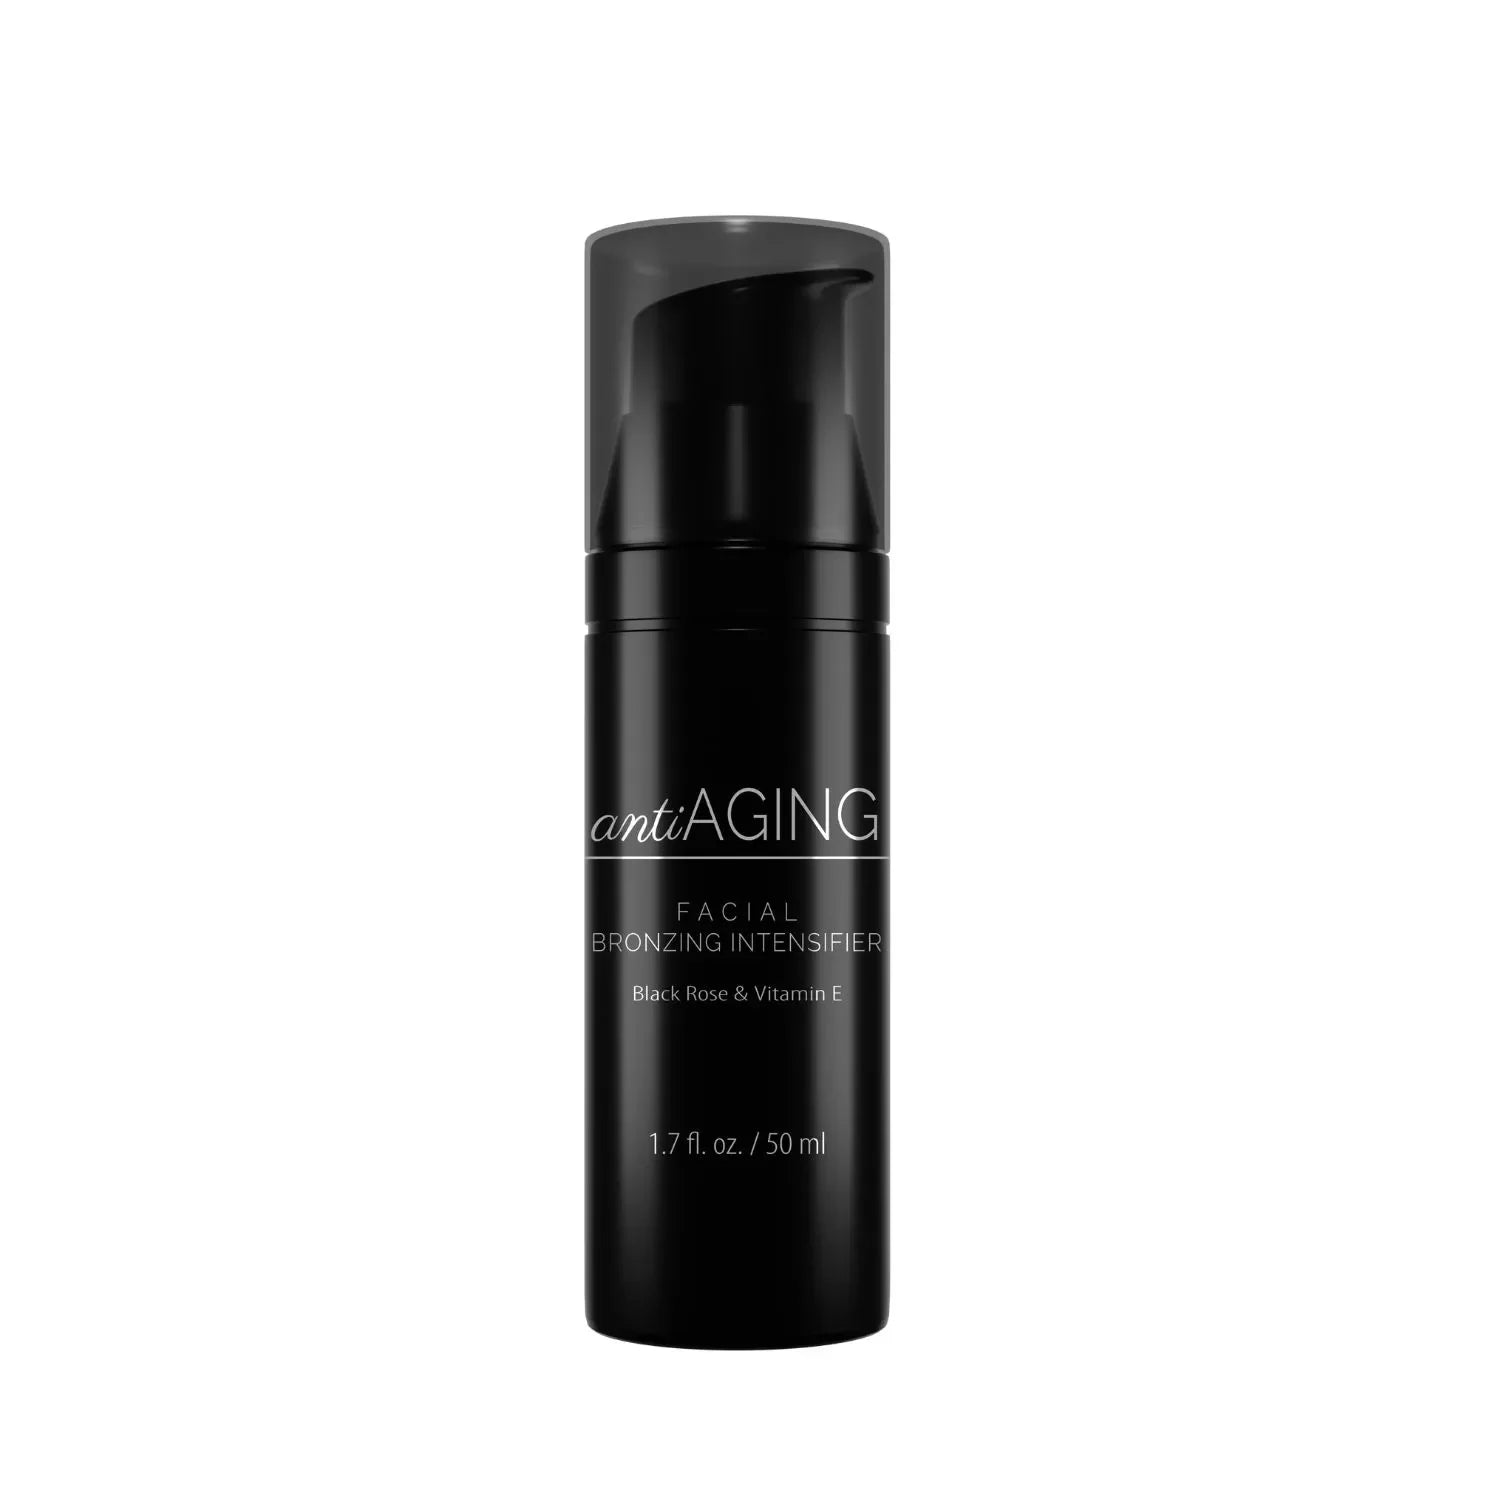 Anti-Aging facial bronzing intensifier with vitamin E